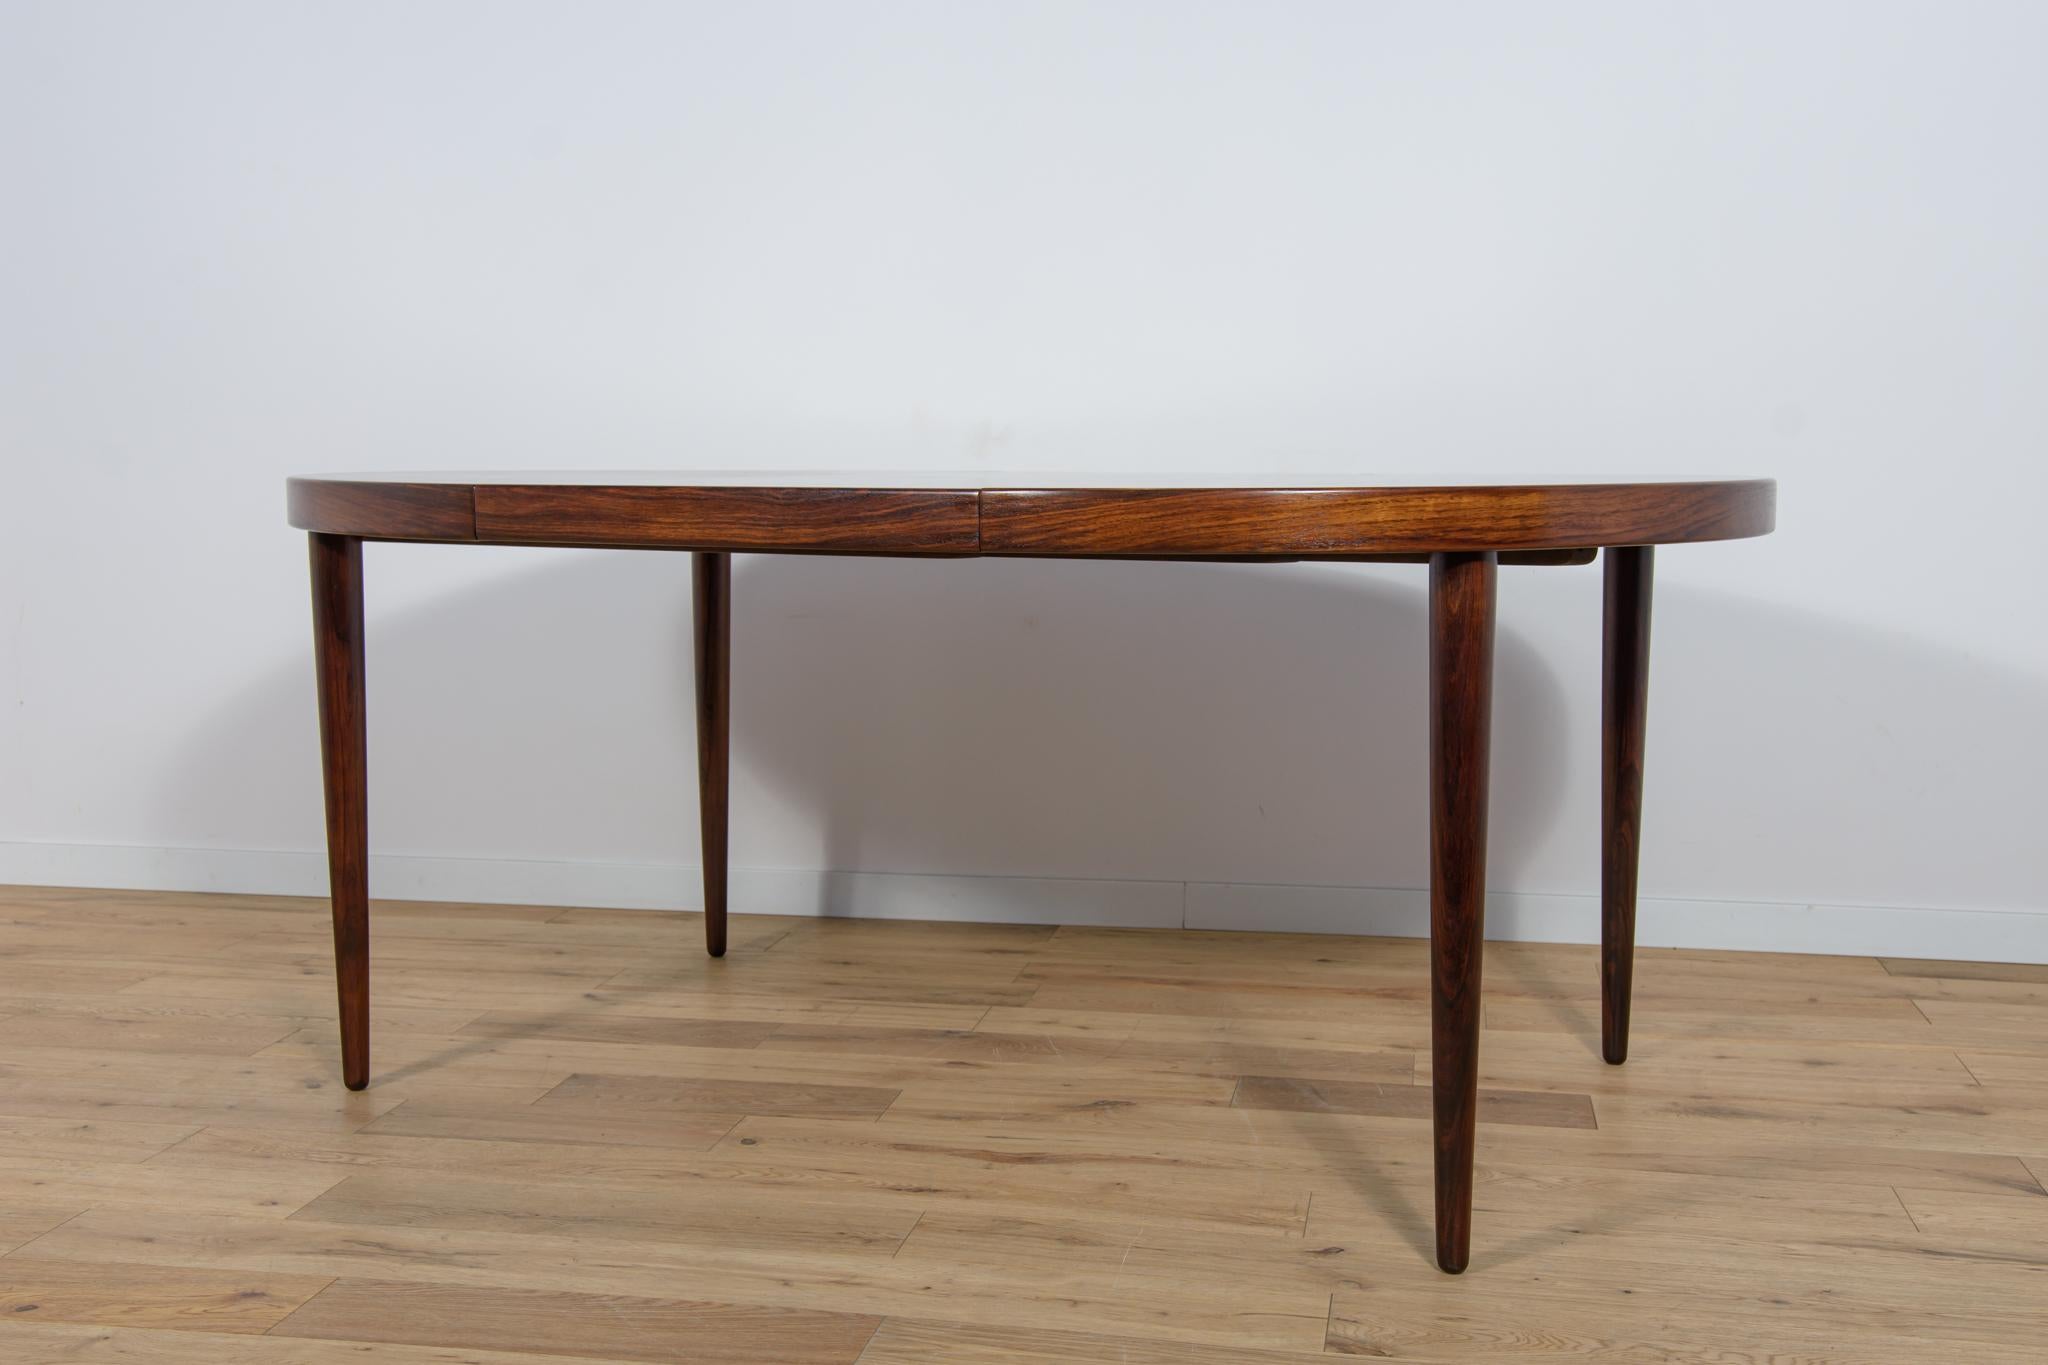  Mid-Century Extendable Rosewood Dining Table by Kai Kristiansen for Feldballes  For Sale 4